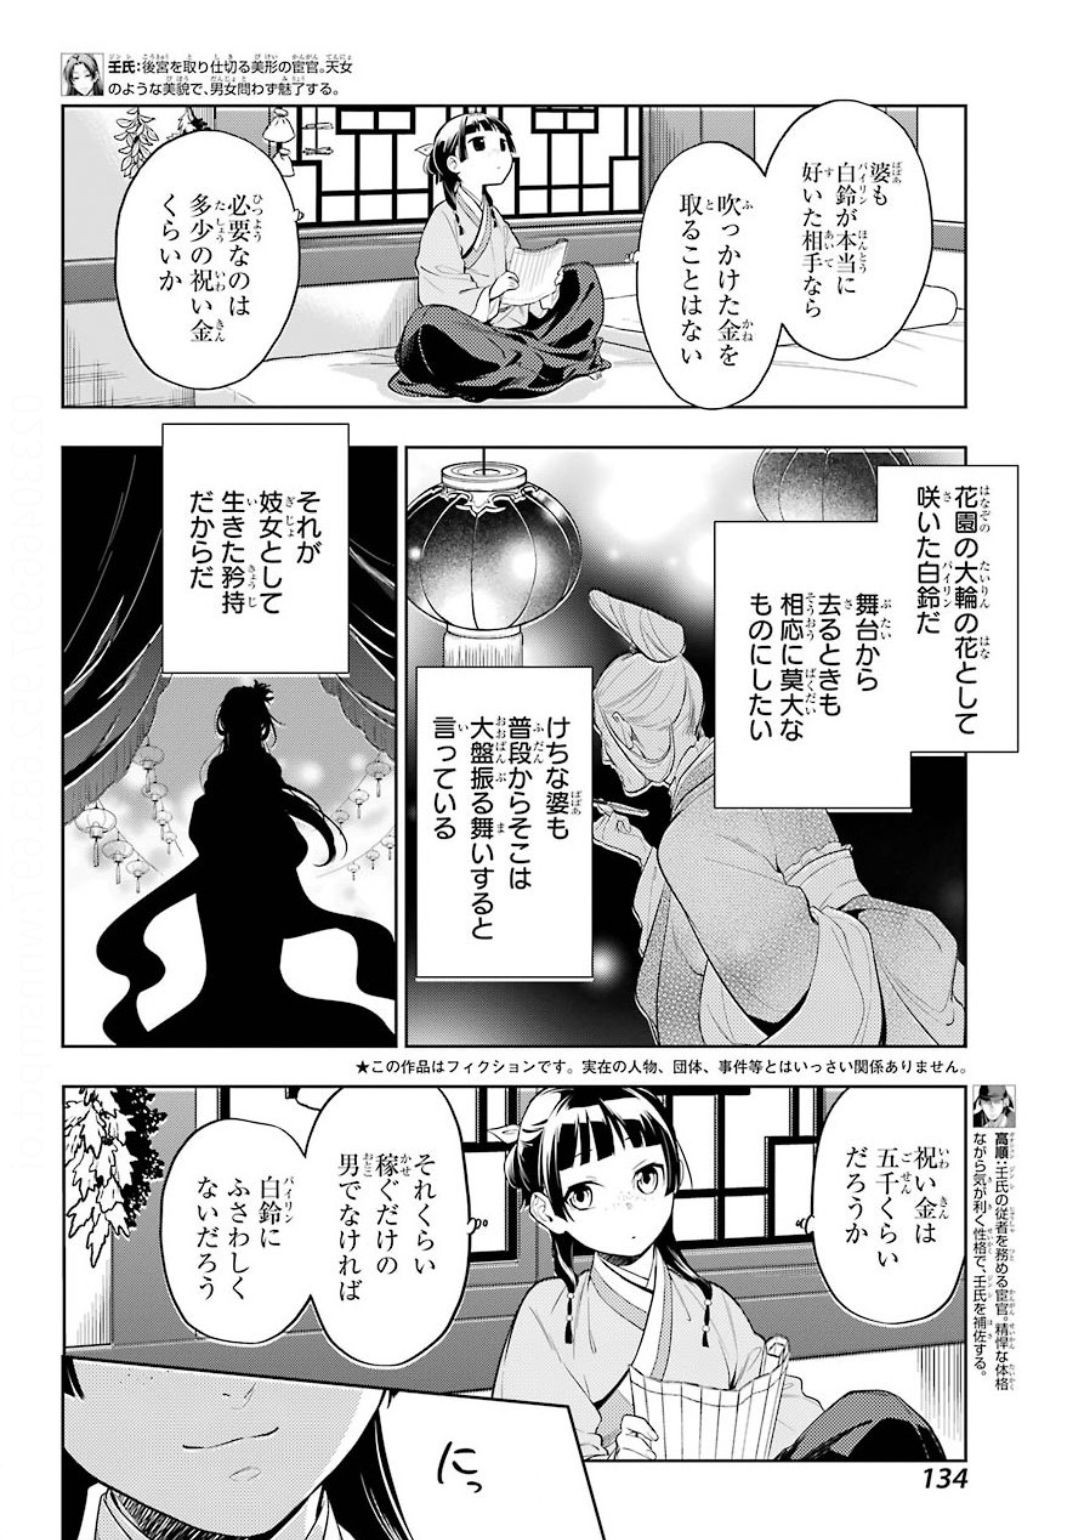 Kusuriya no Hitorigoto - Chapter 36-1 - Page 4